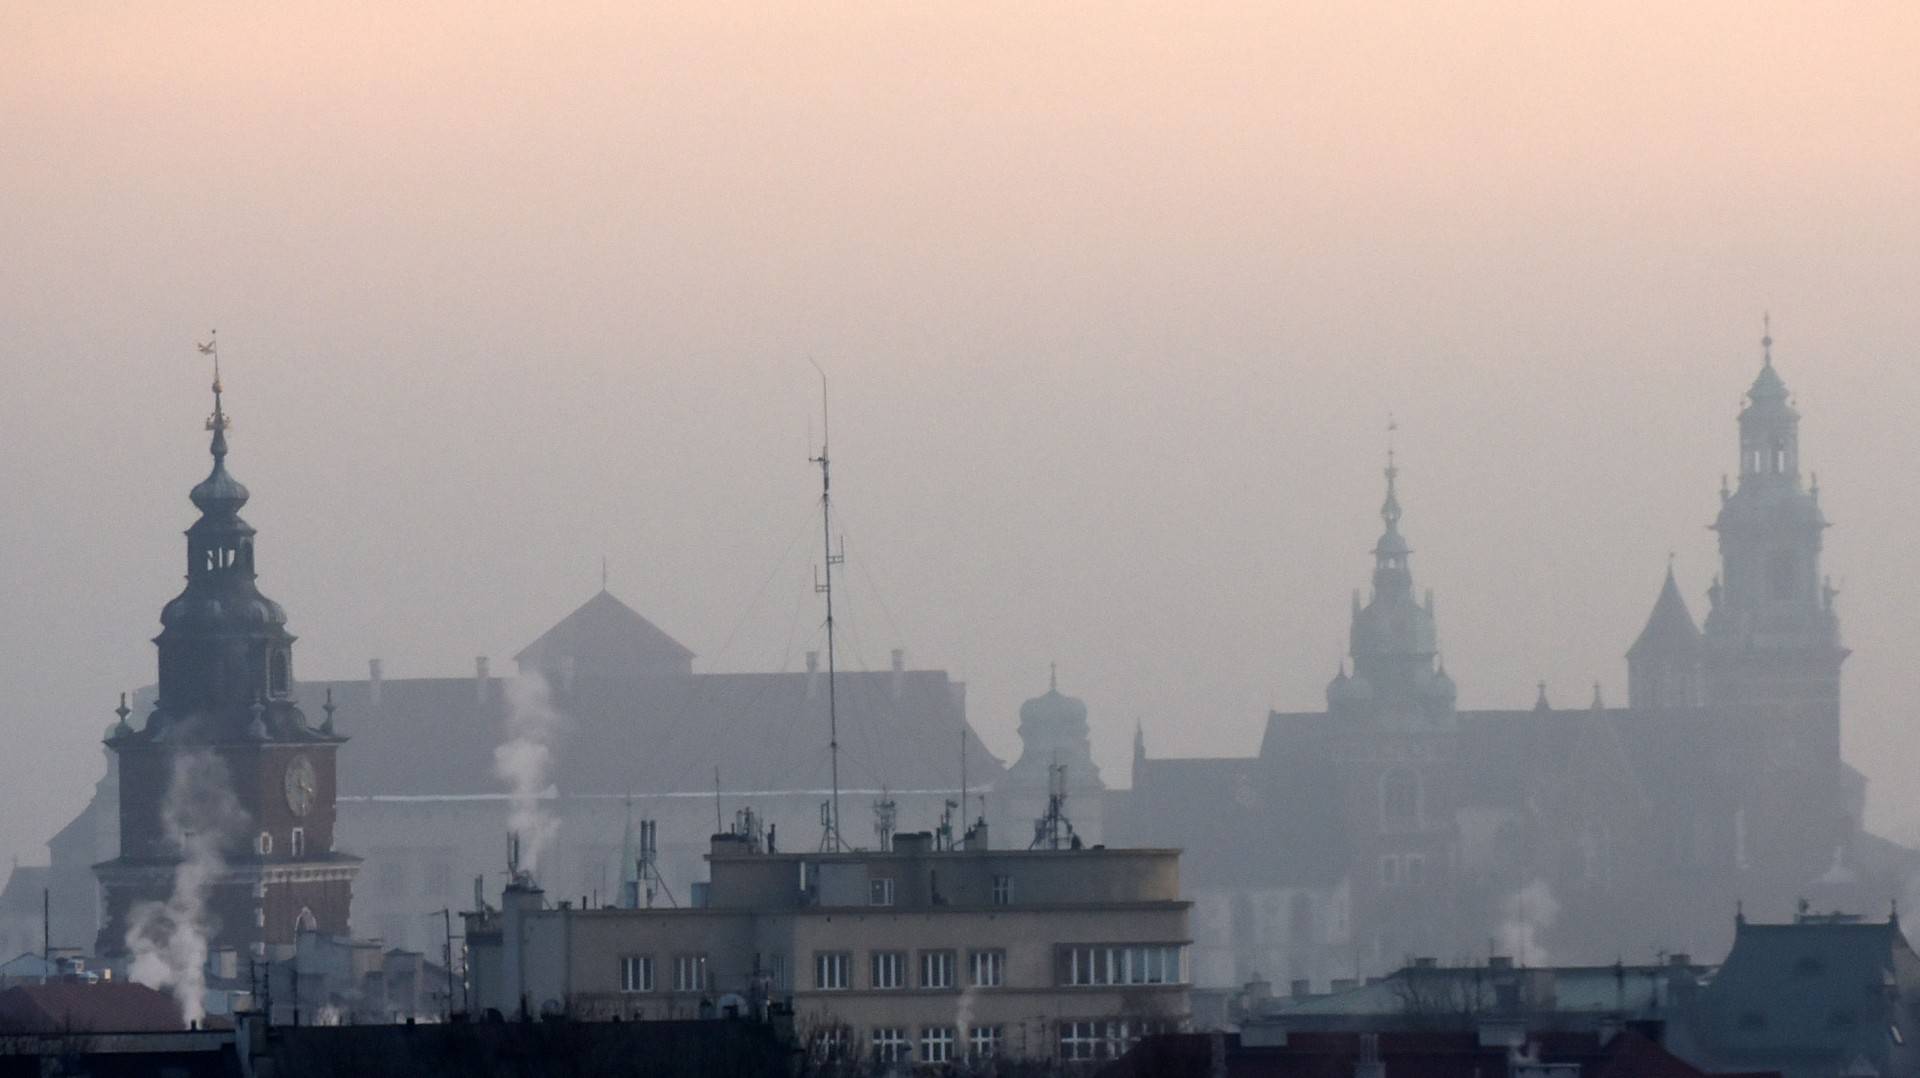 Smogowy poranek w Krakowie, fot. Marek Lasyk